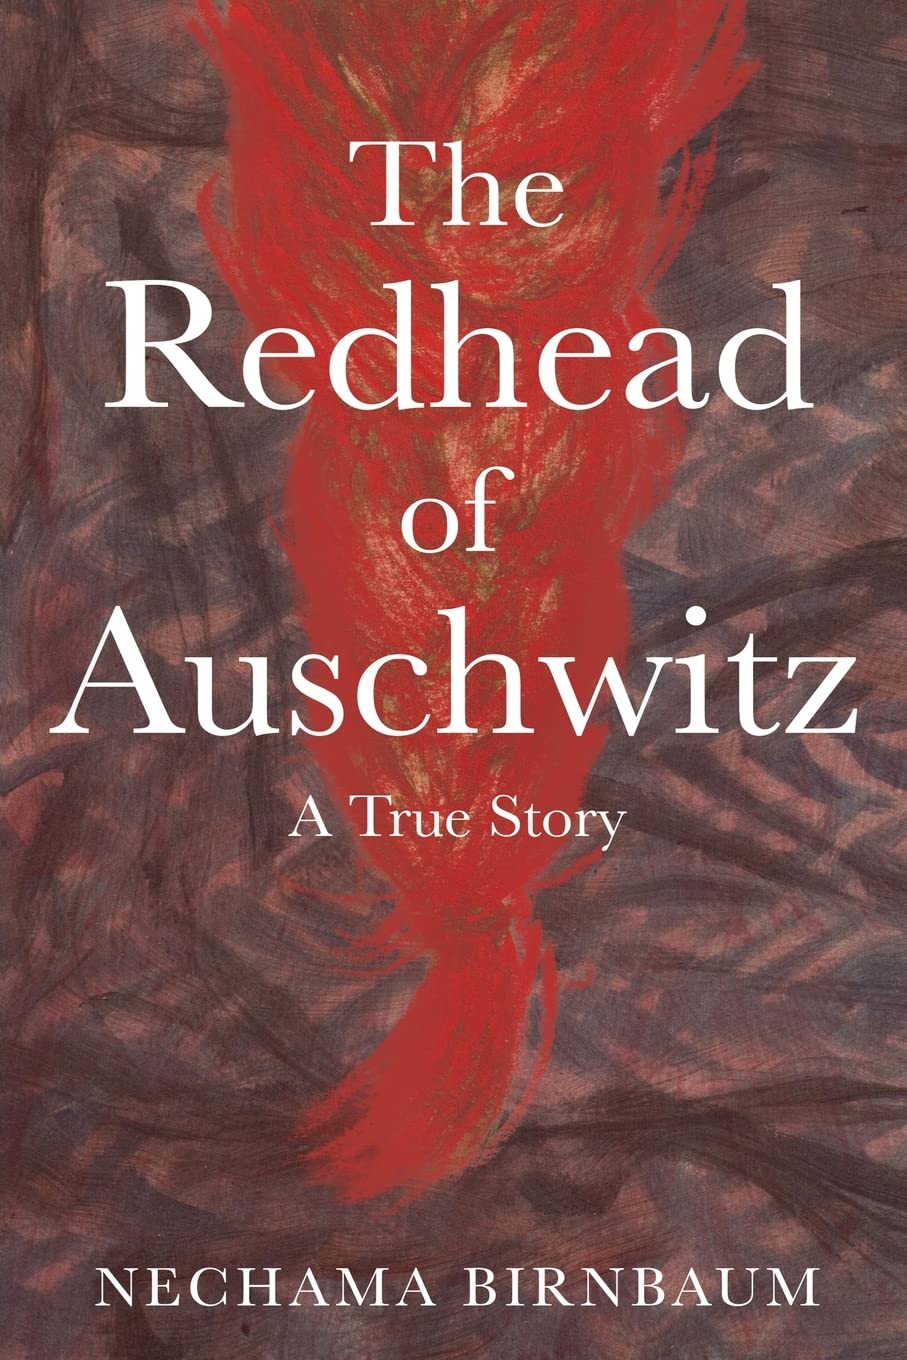 The Redhead of Auschwitz by Nechama Birnbaum